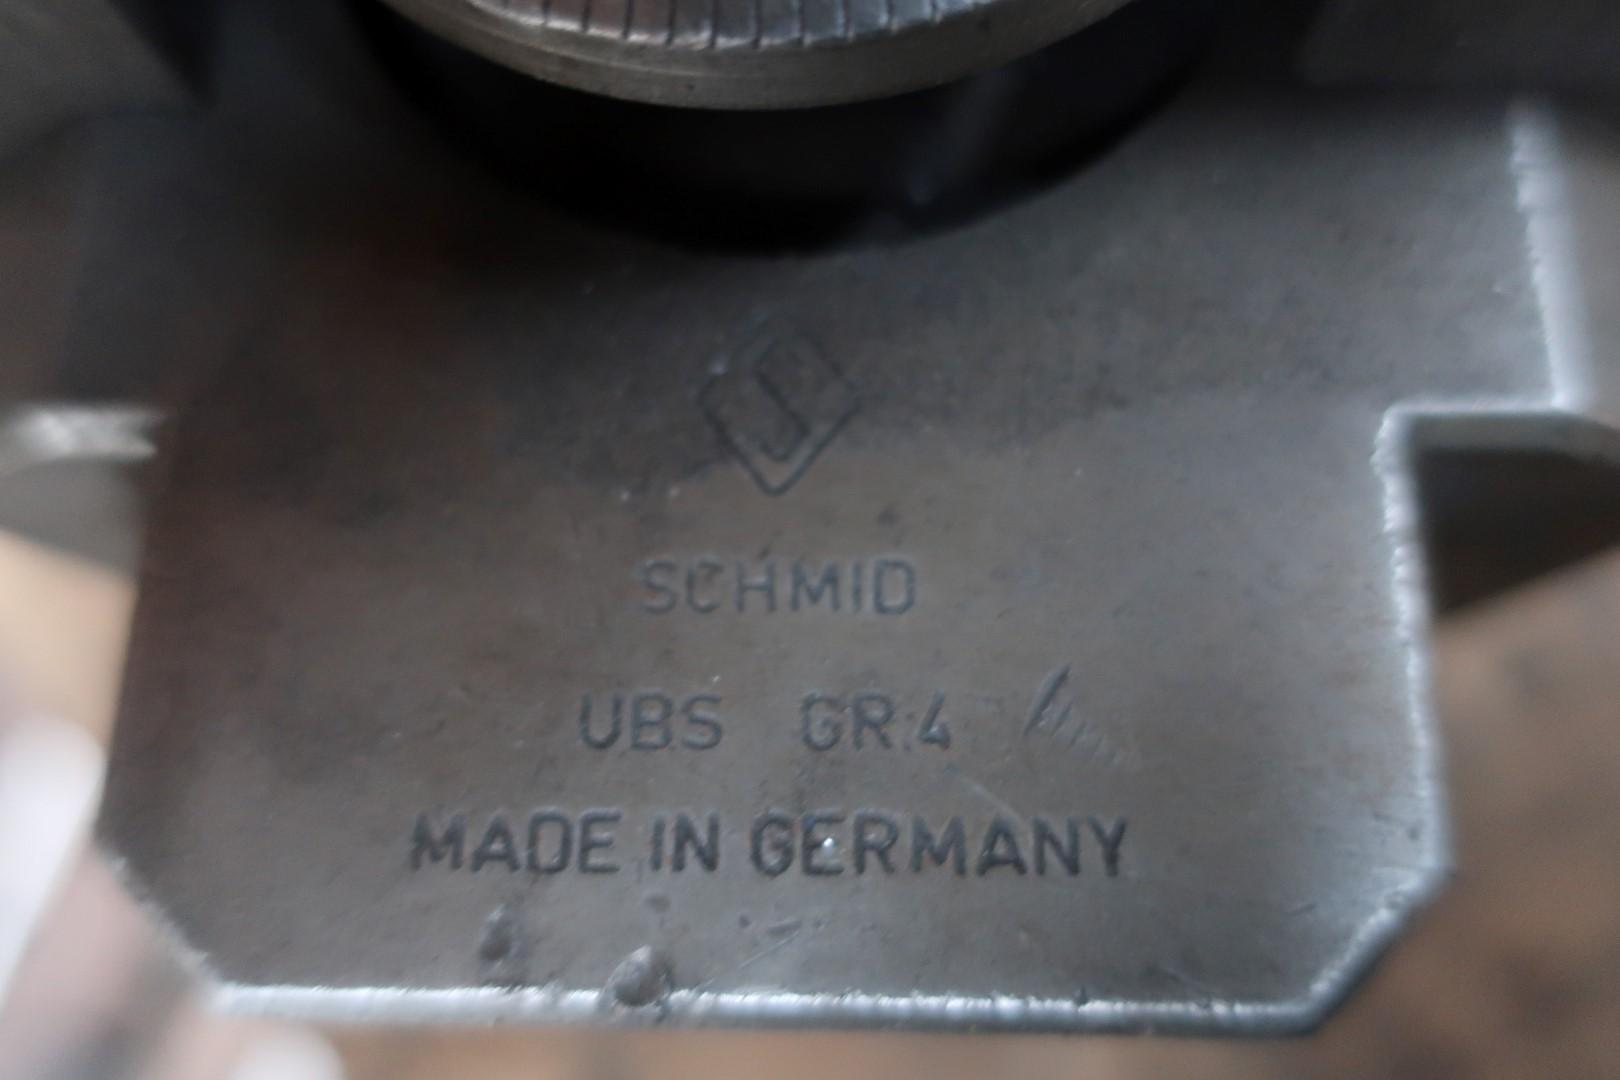 Boring/Schmid - UBS GR4